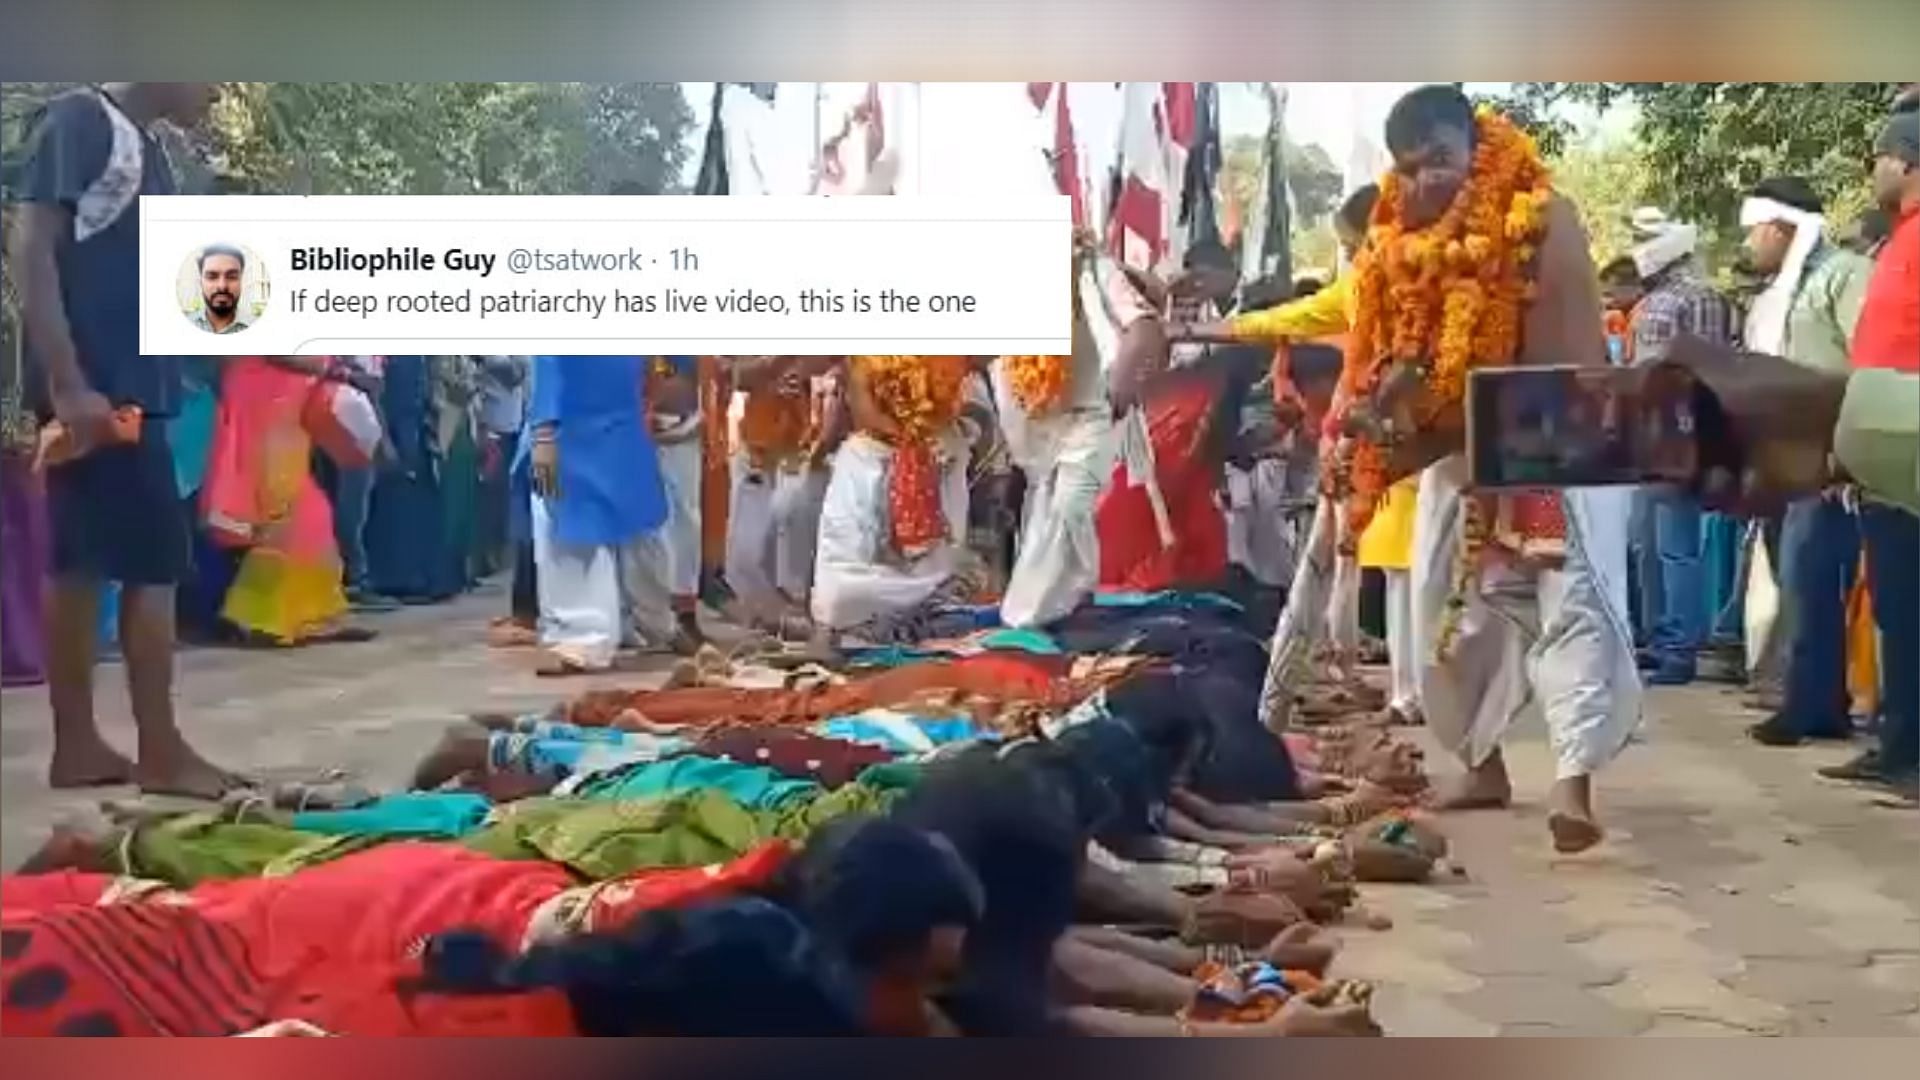 Twitter Reacts to Chattisgarh Priests Walking on Women's Backs